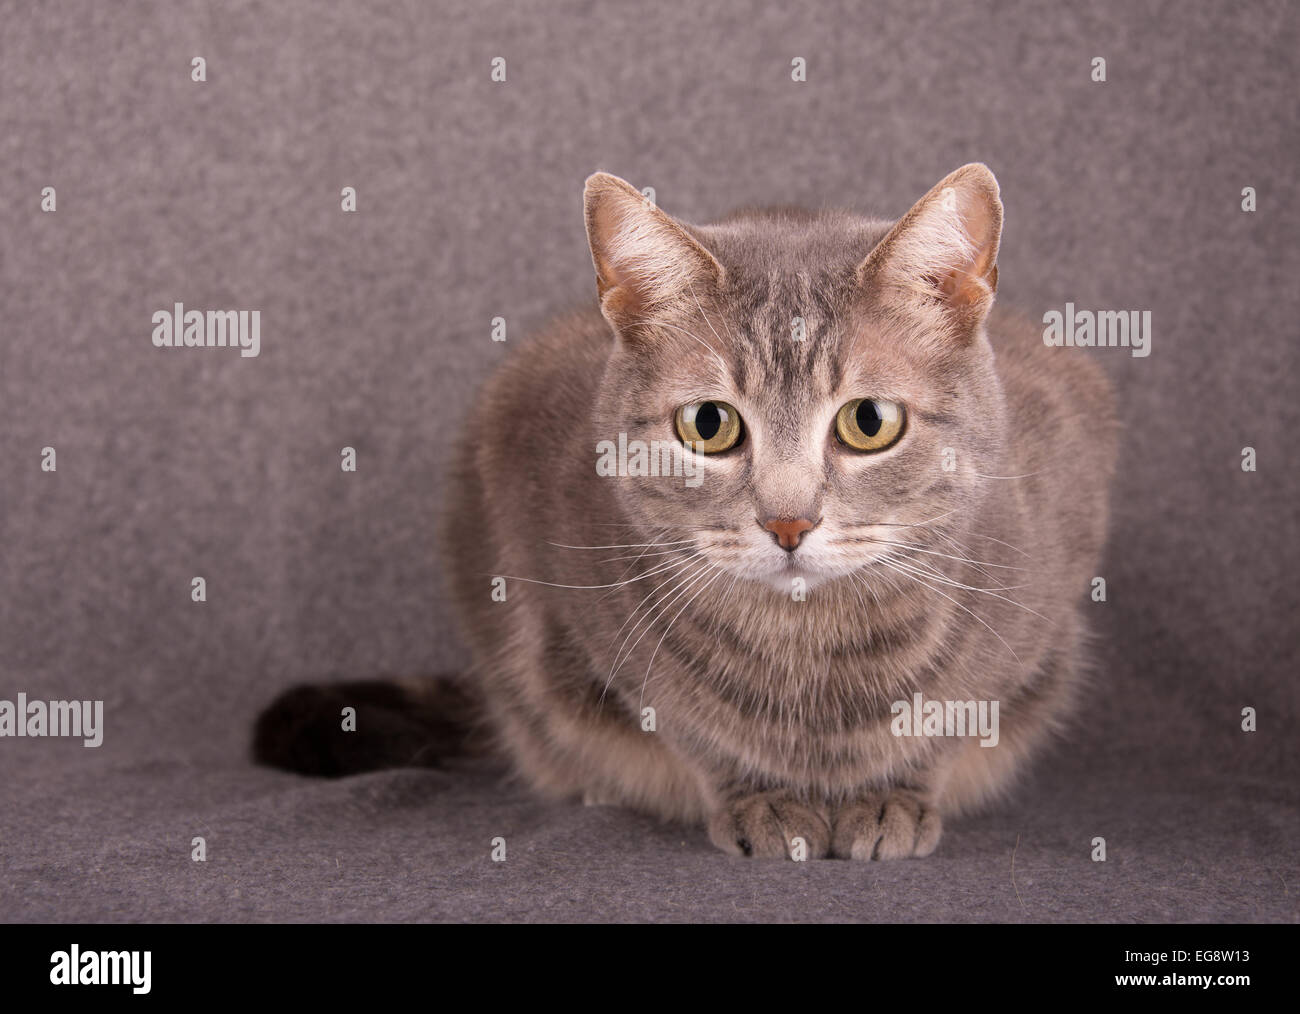 Blue tabby cat against light gray background Stock Photo